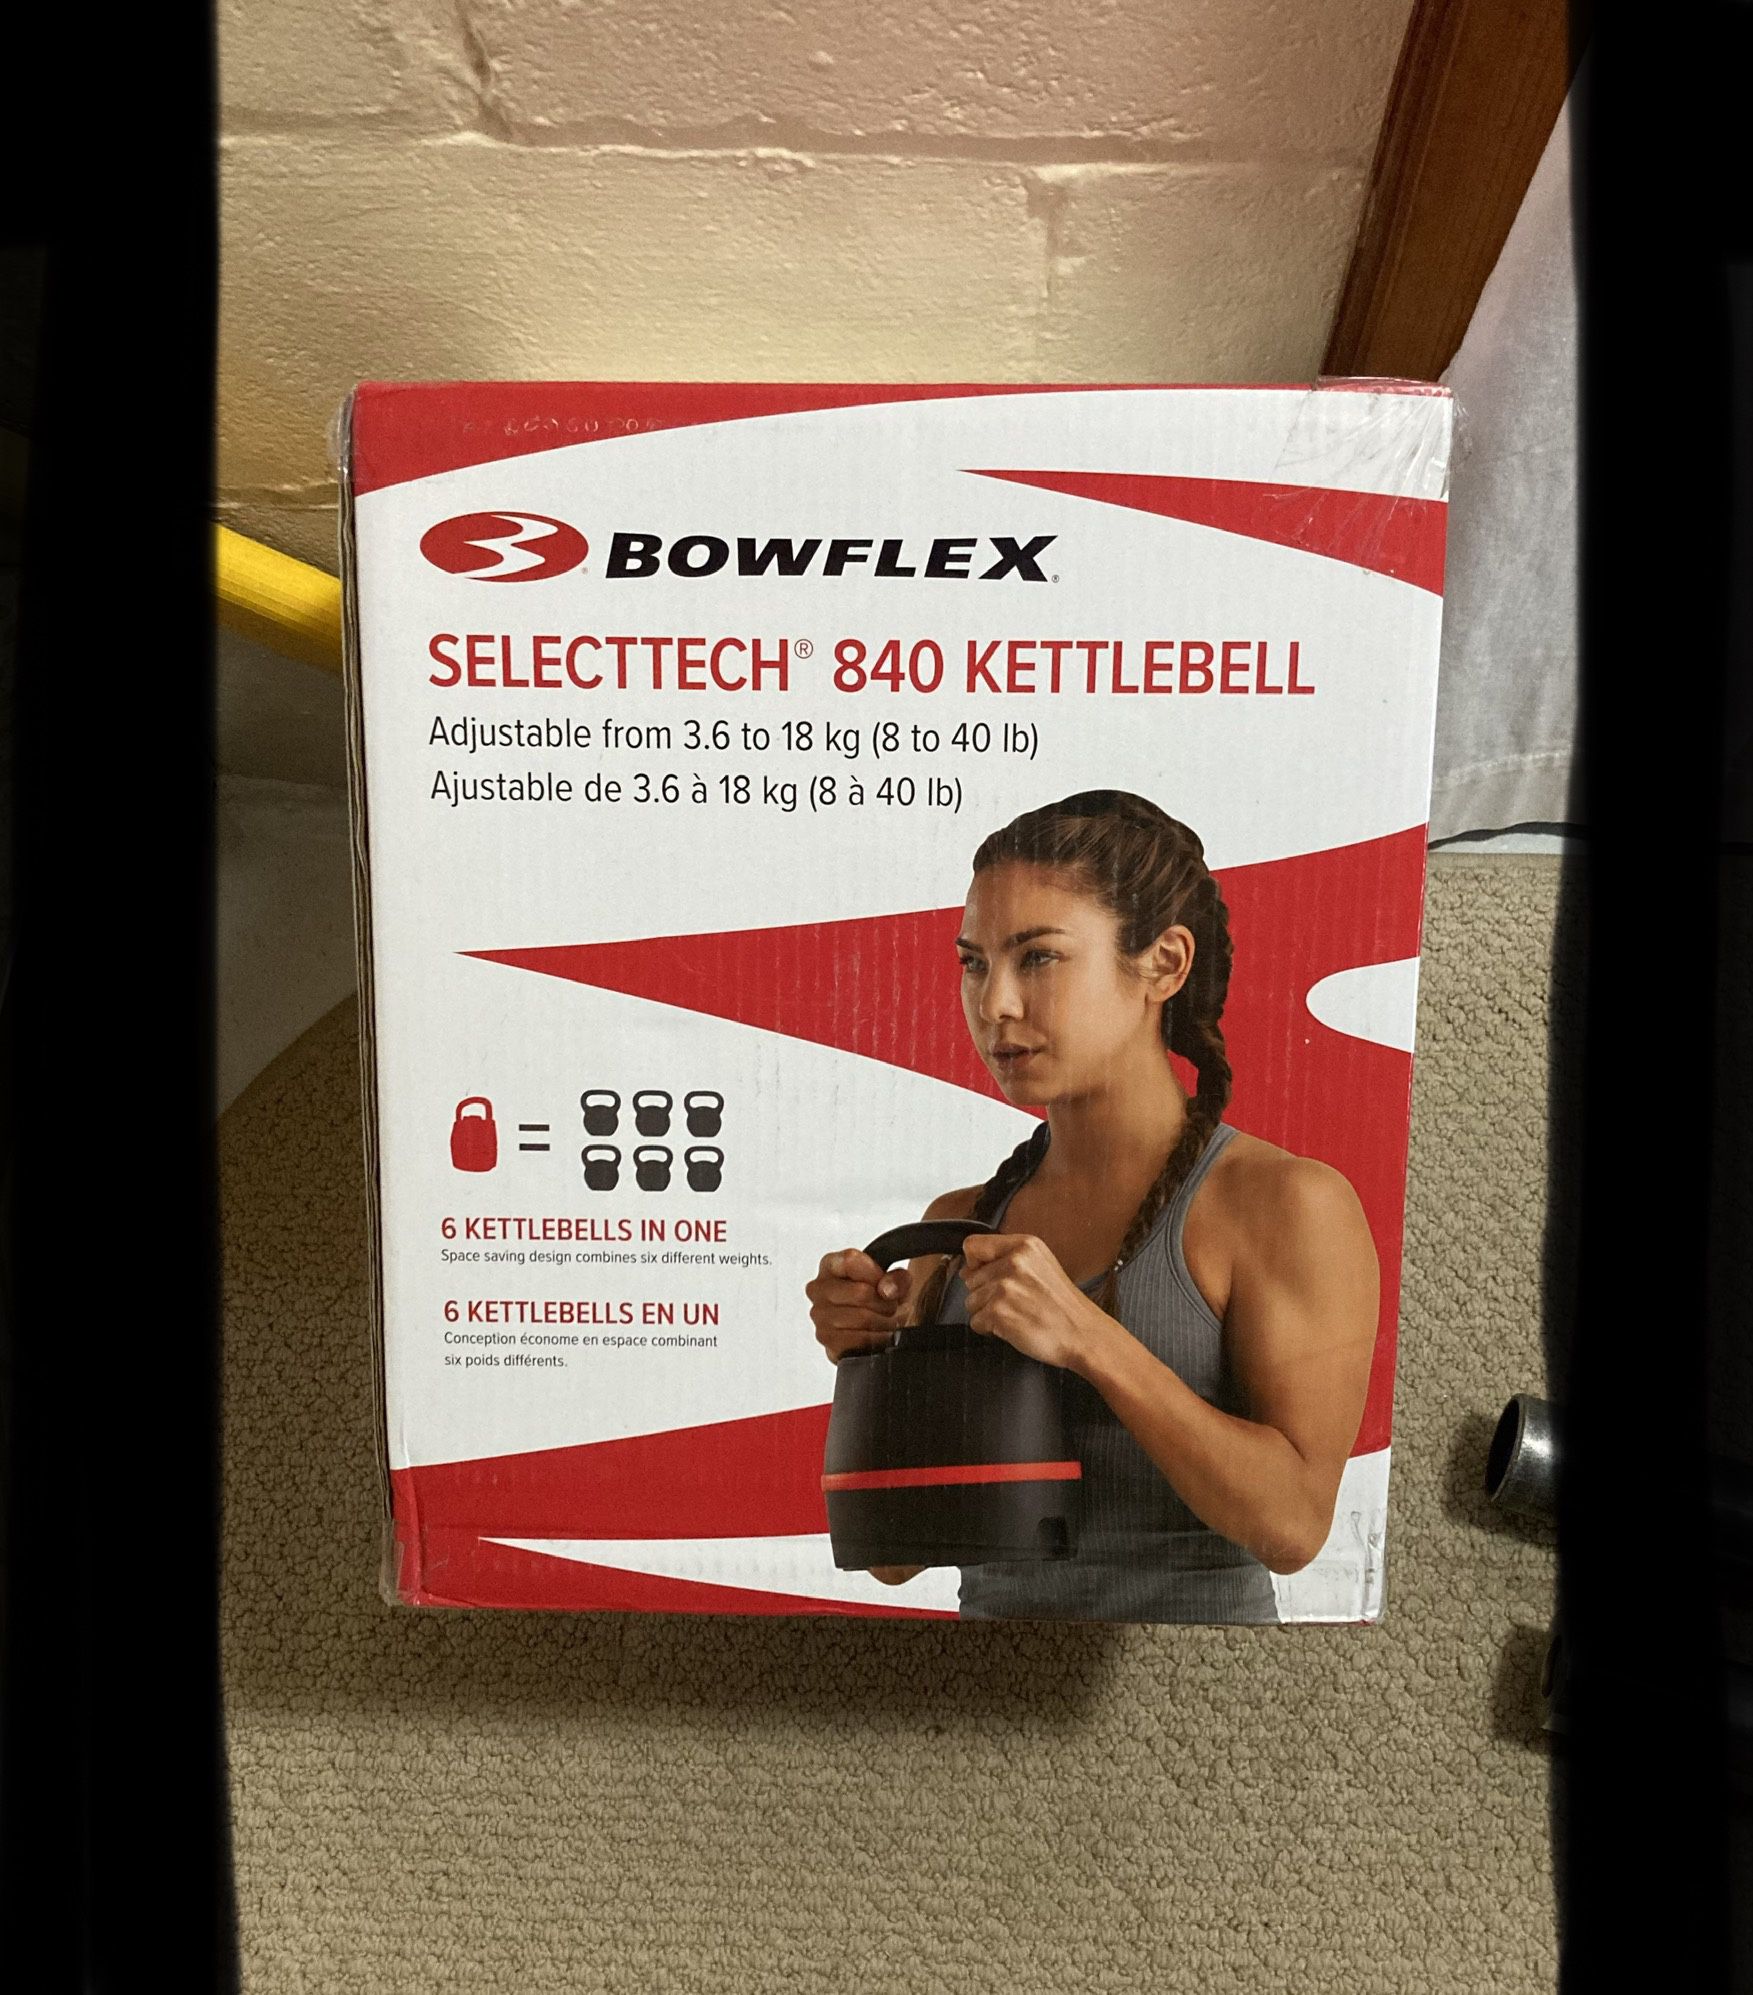 Bowflex SelectTech 840 Kettlebell BRAND NEW FACTORY SEALED kettle bell select tech adjustable bow flex 8-40lbs 40 lb lbs 40lb 8lb 8lbs